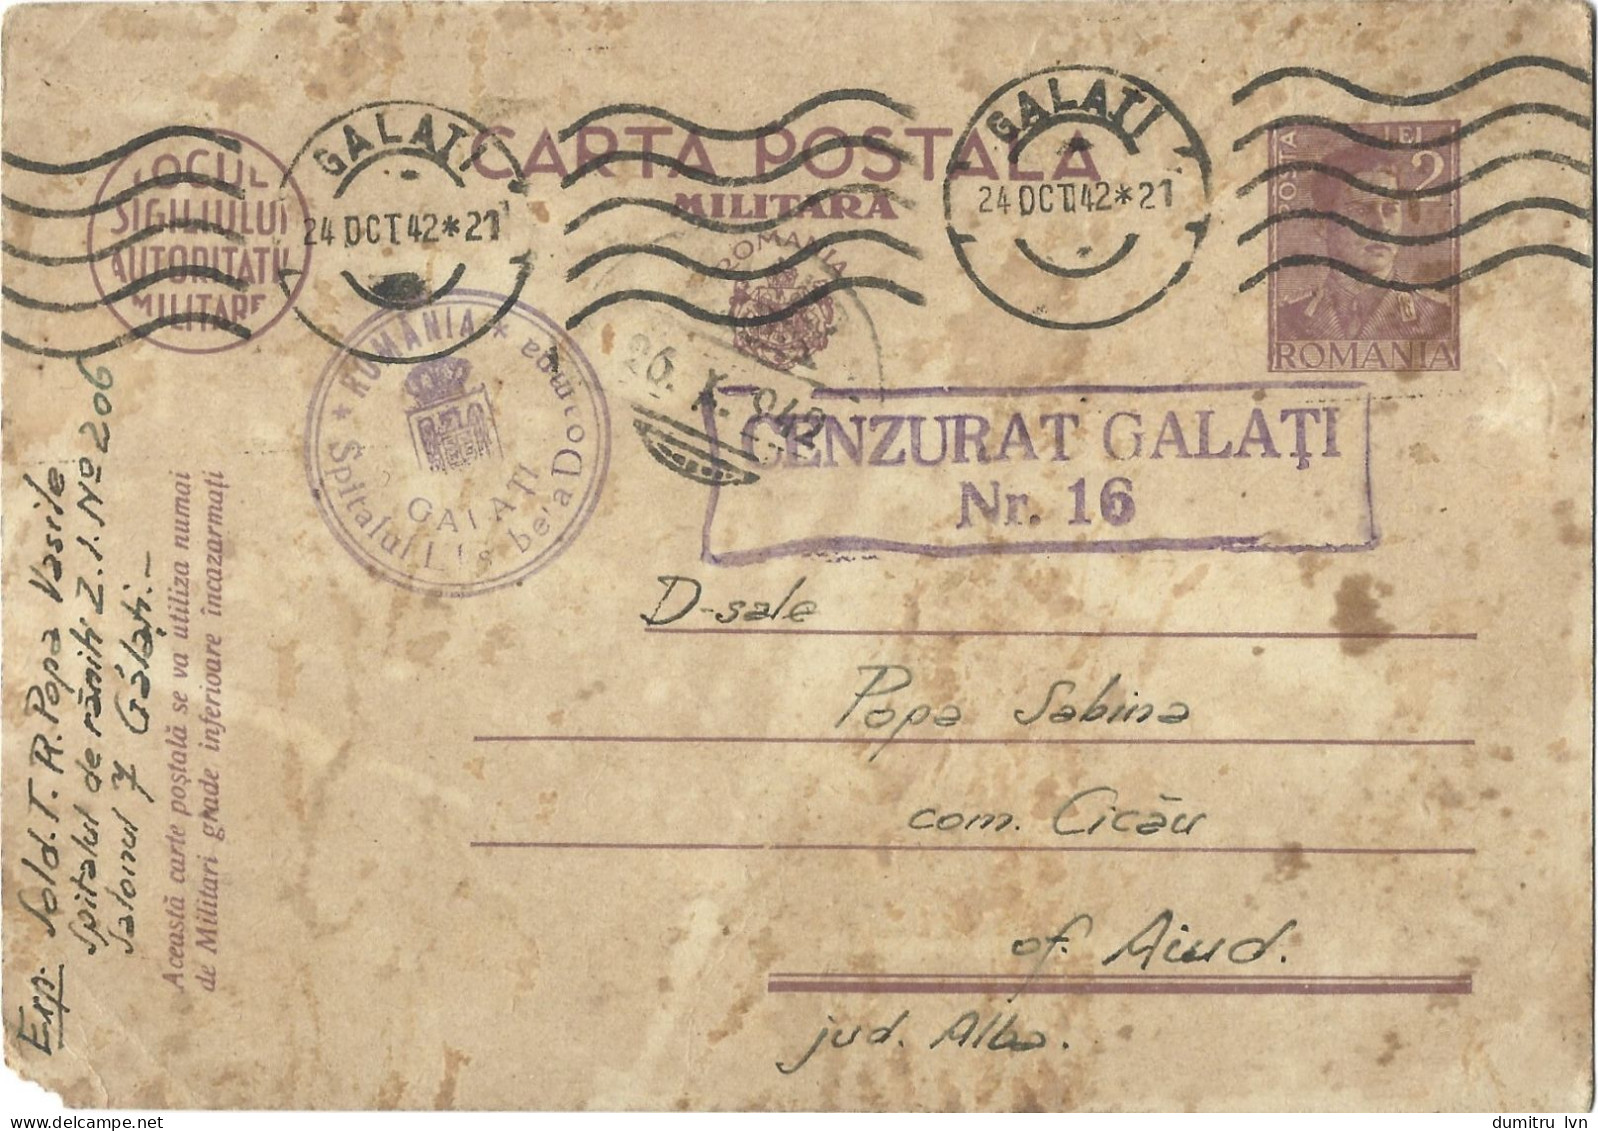 ROMANIA 1942 MILITARY POSTCARD, CENSORED GALATI Nr.16, SENT FROM HOSPITAL Z. I. No.206, SALON 7, POSTCARD STATIONERY - World War 2 Letters